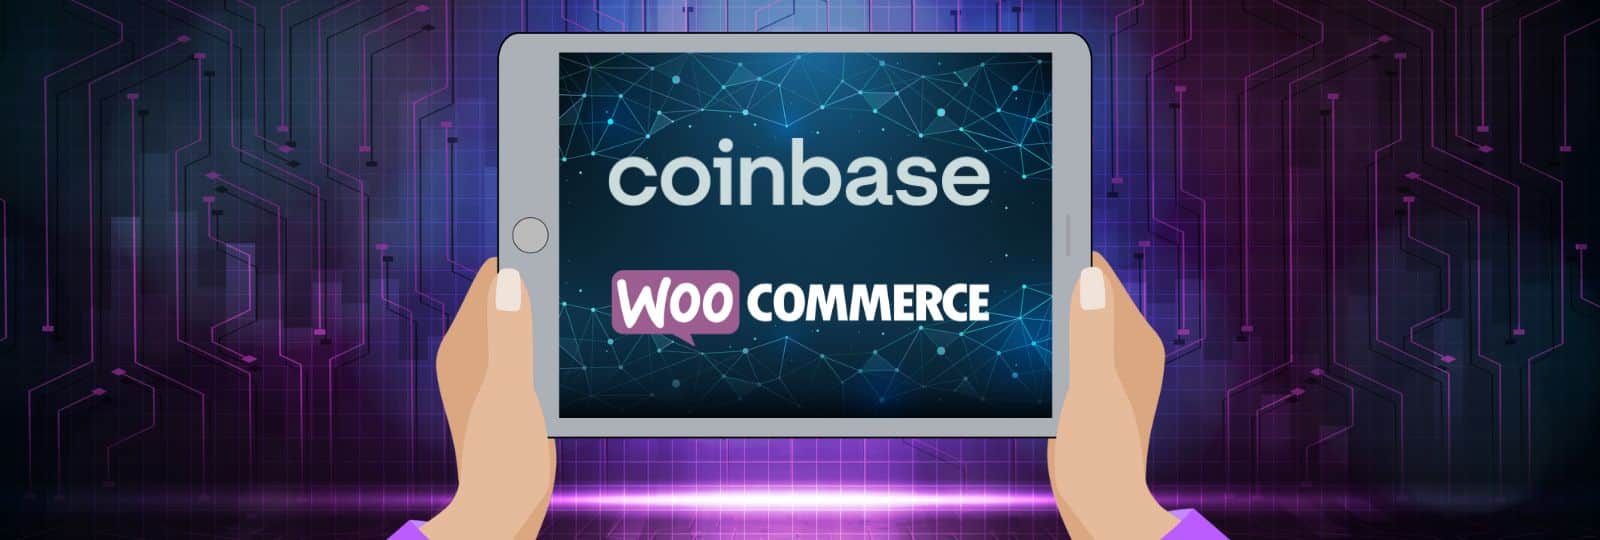 woocommerce coinbase